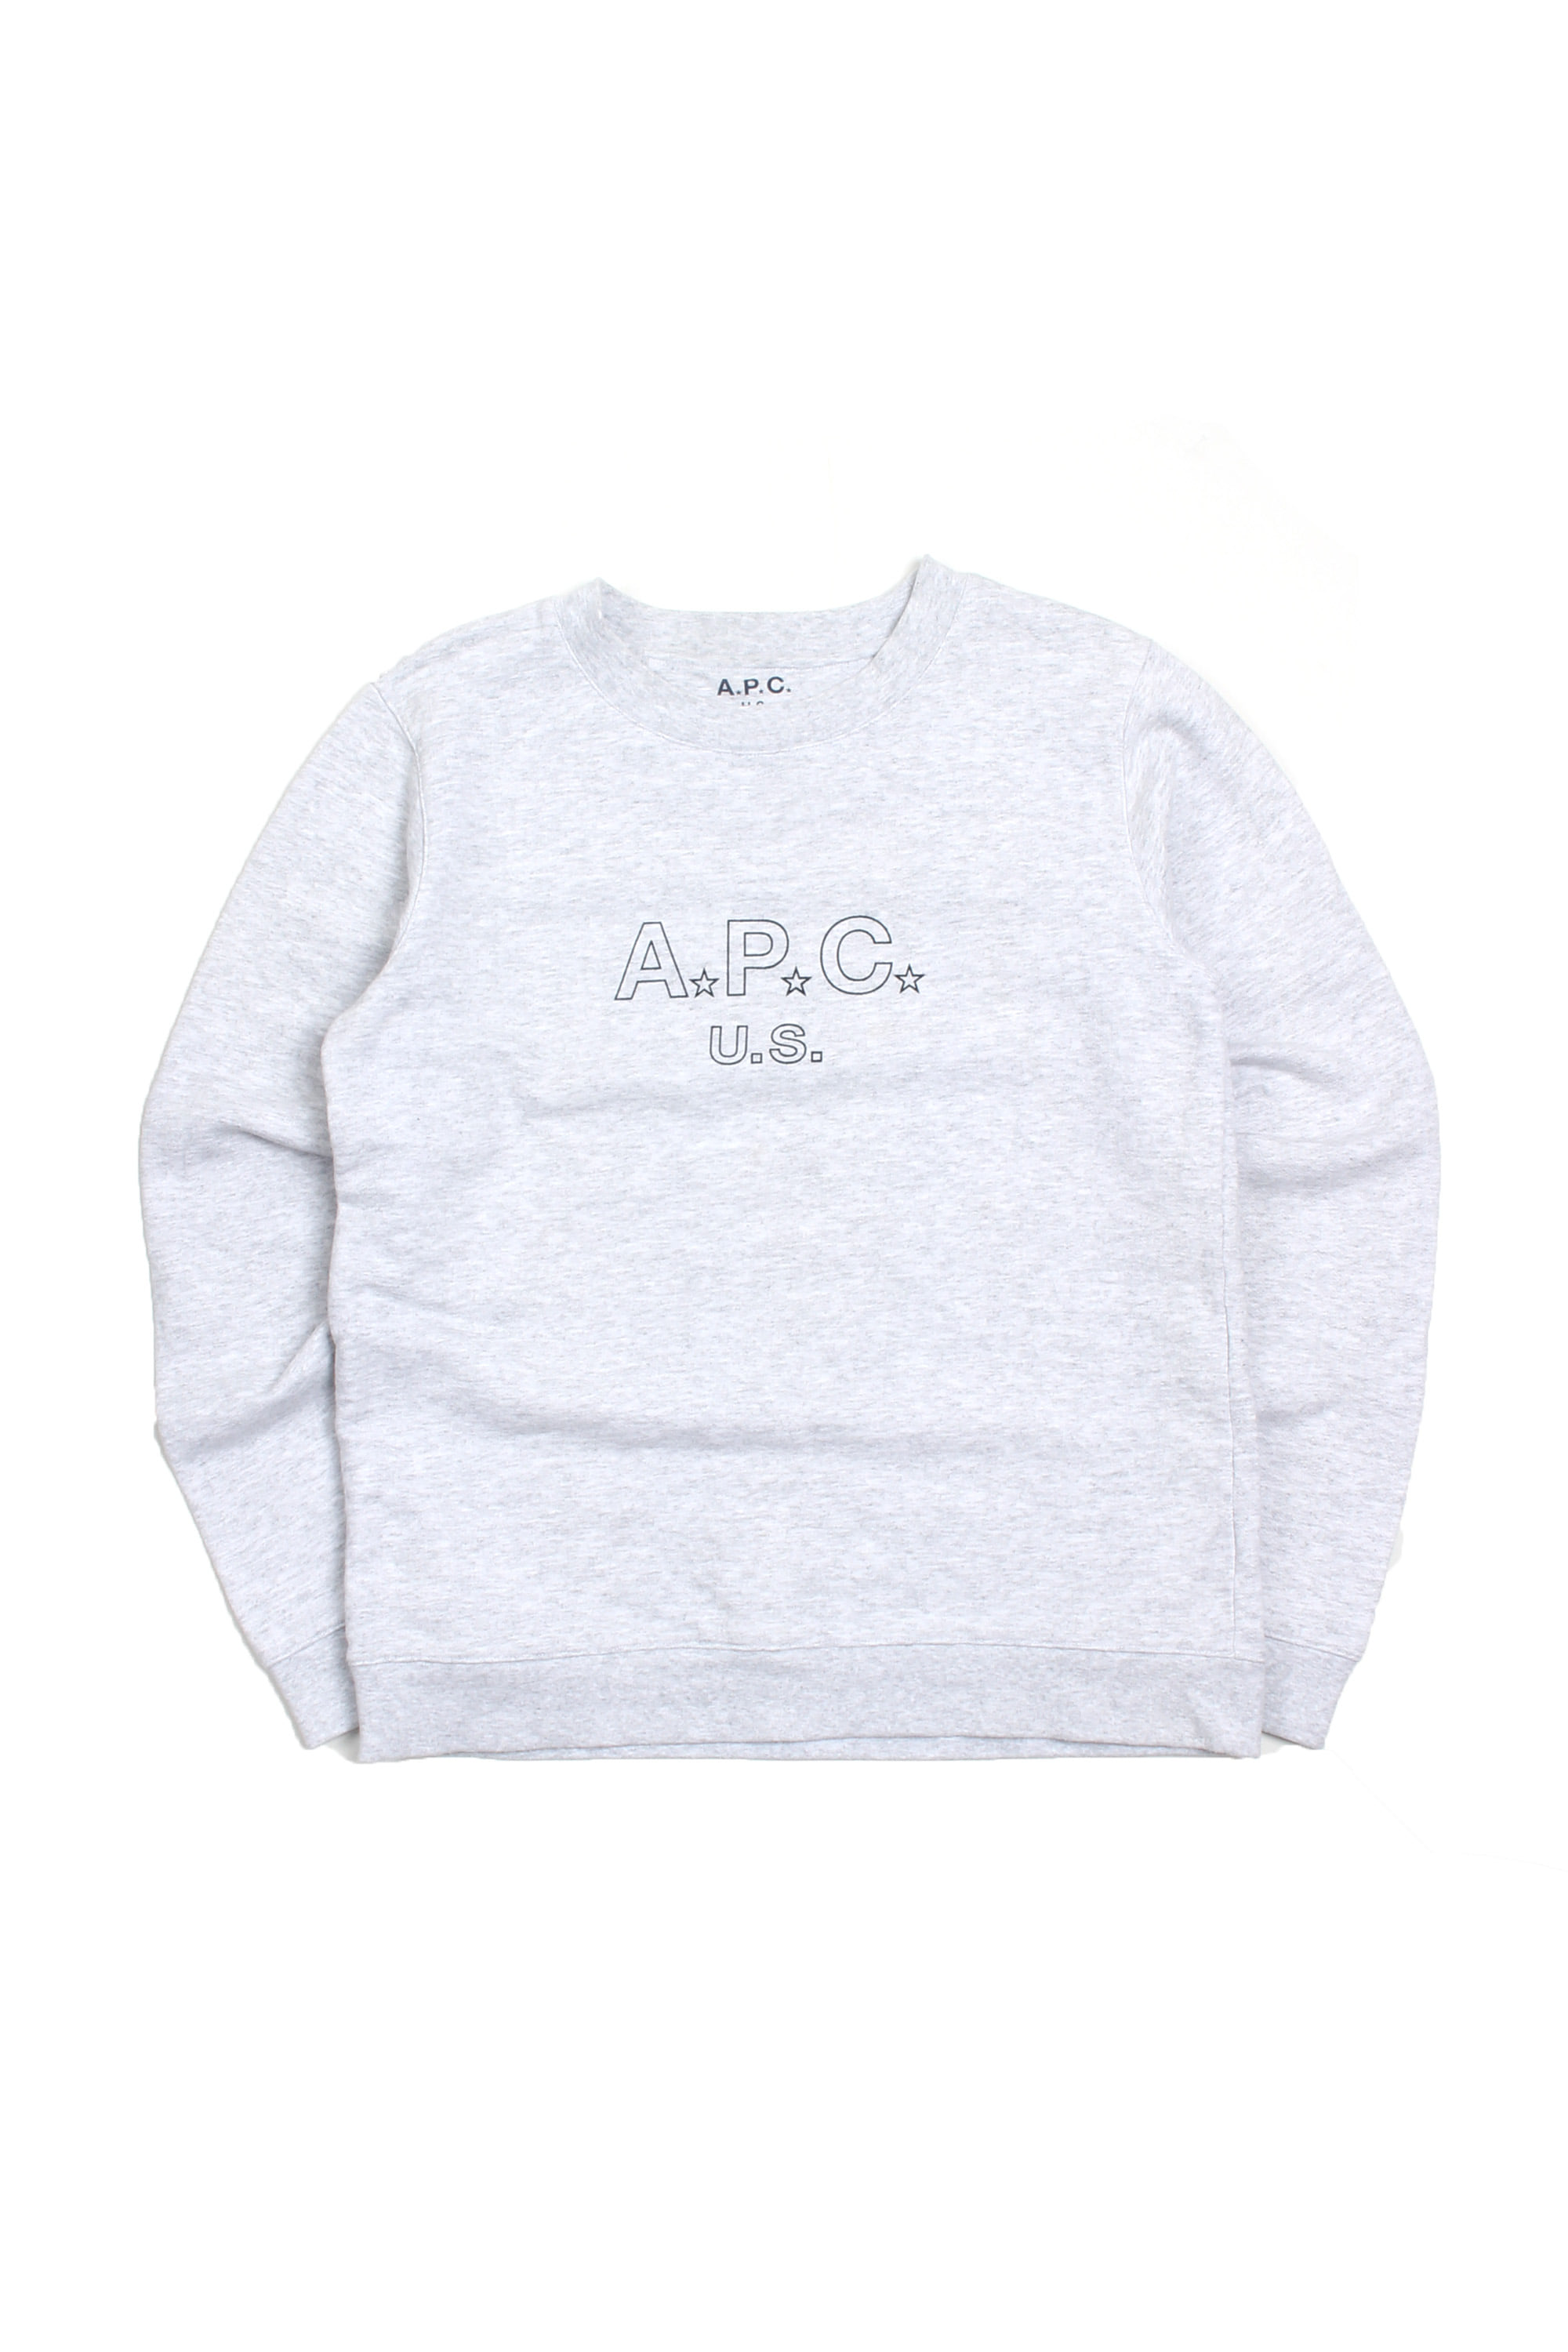 A.P.C logo Sweatshirts